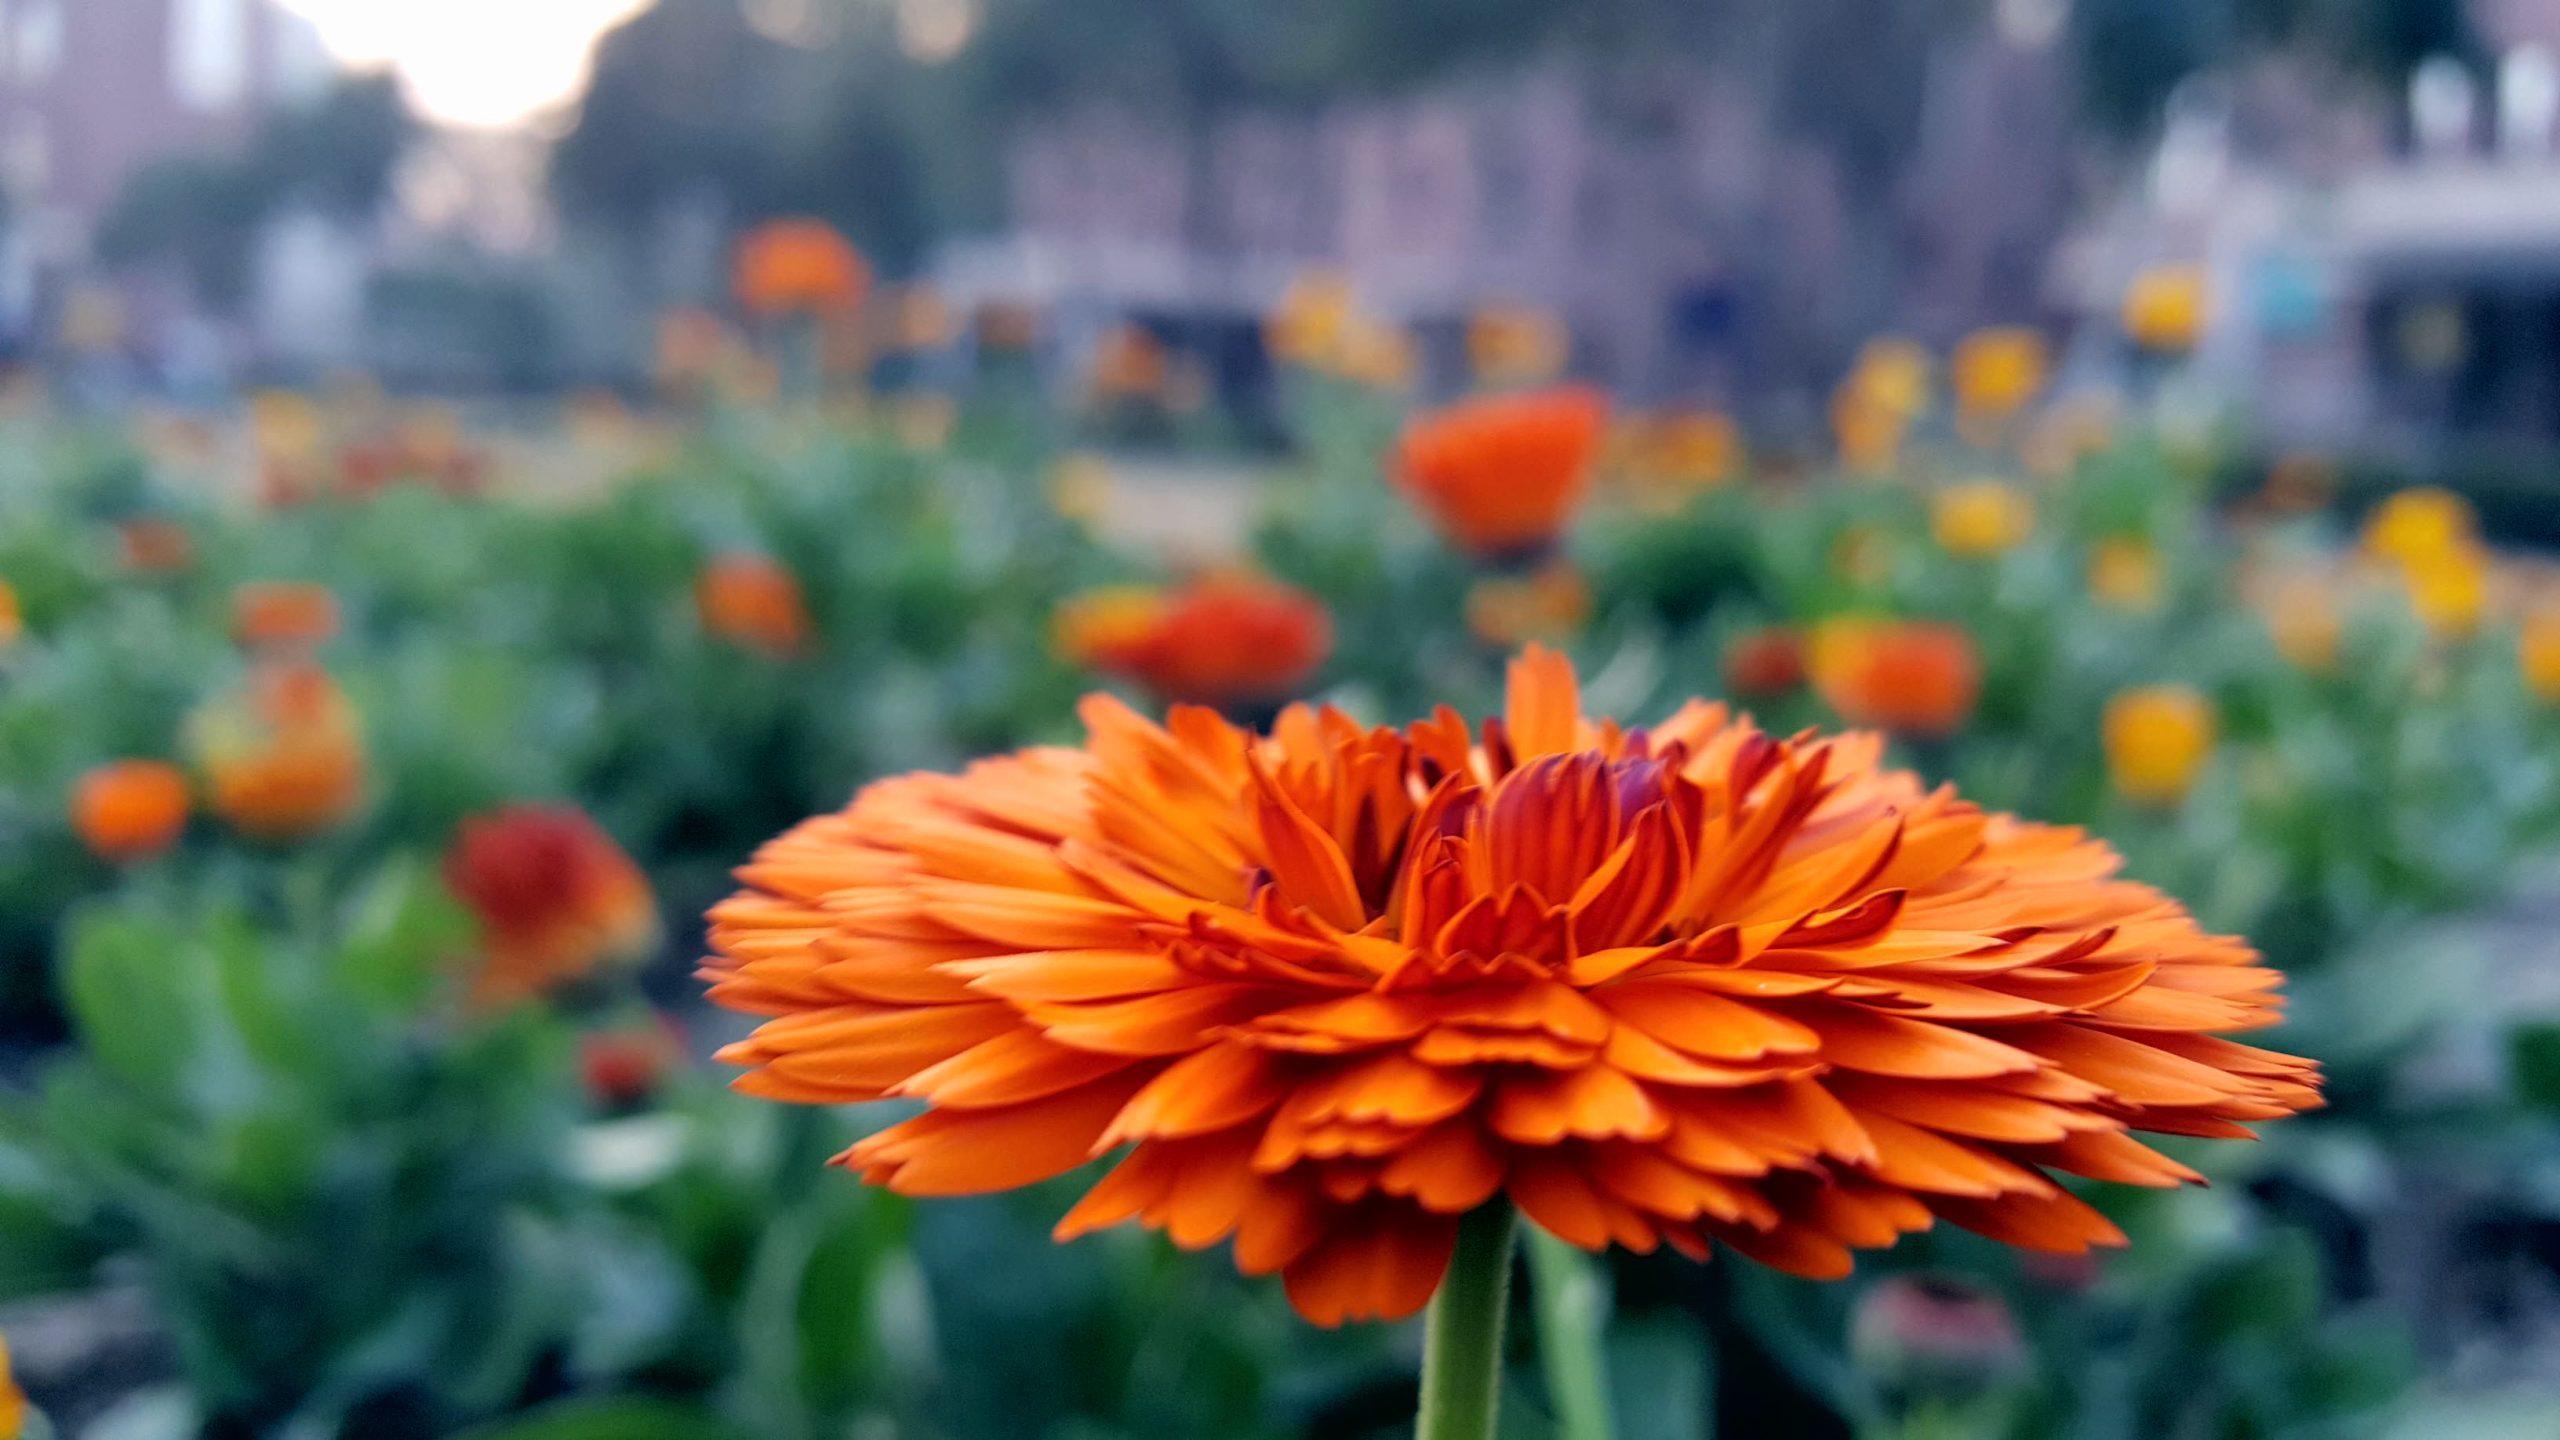 Orange Flowers